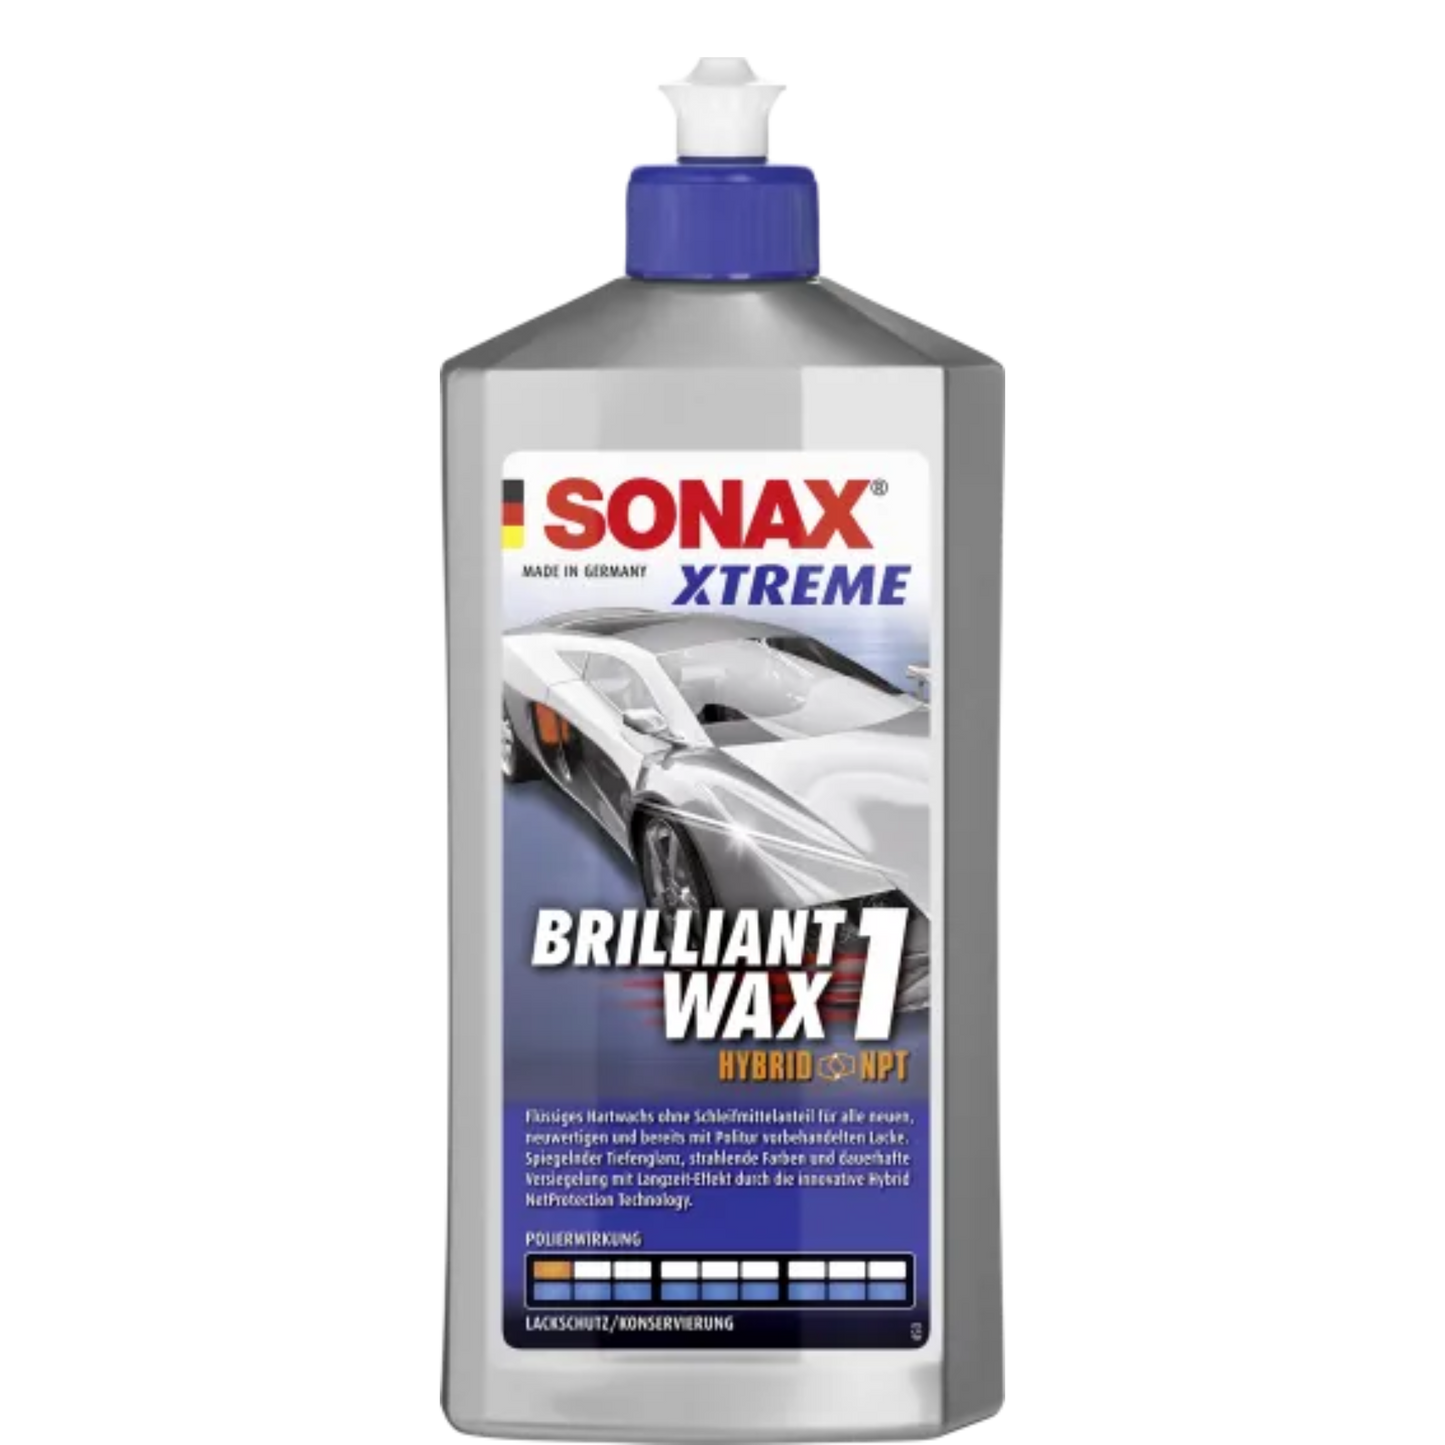 SONAX XTREME Brilliantwax 1 Hybrid NPT, 500ml